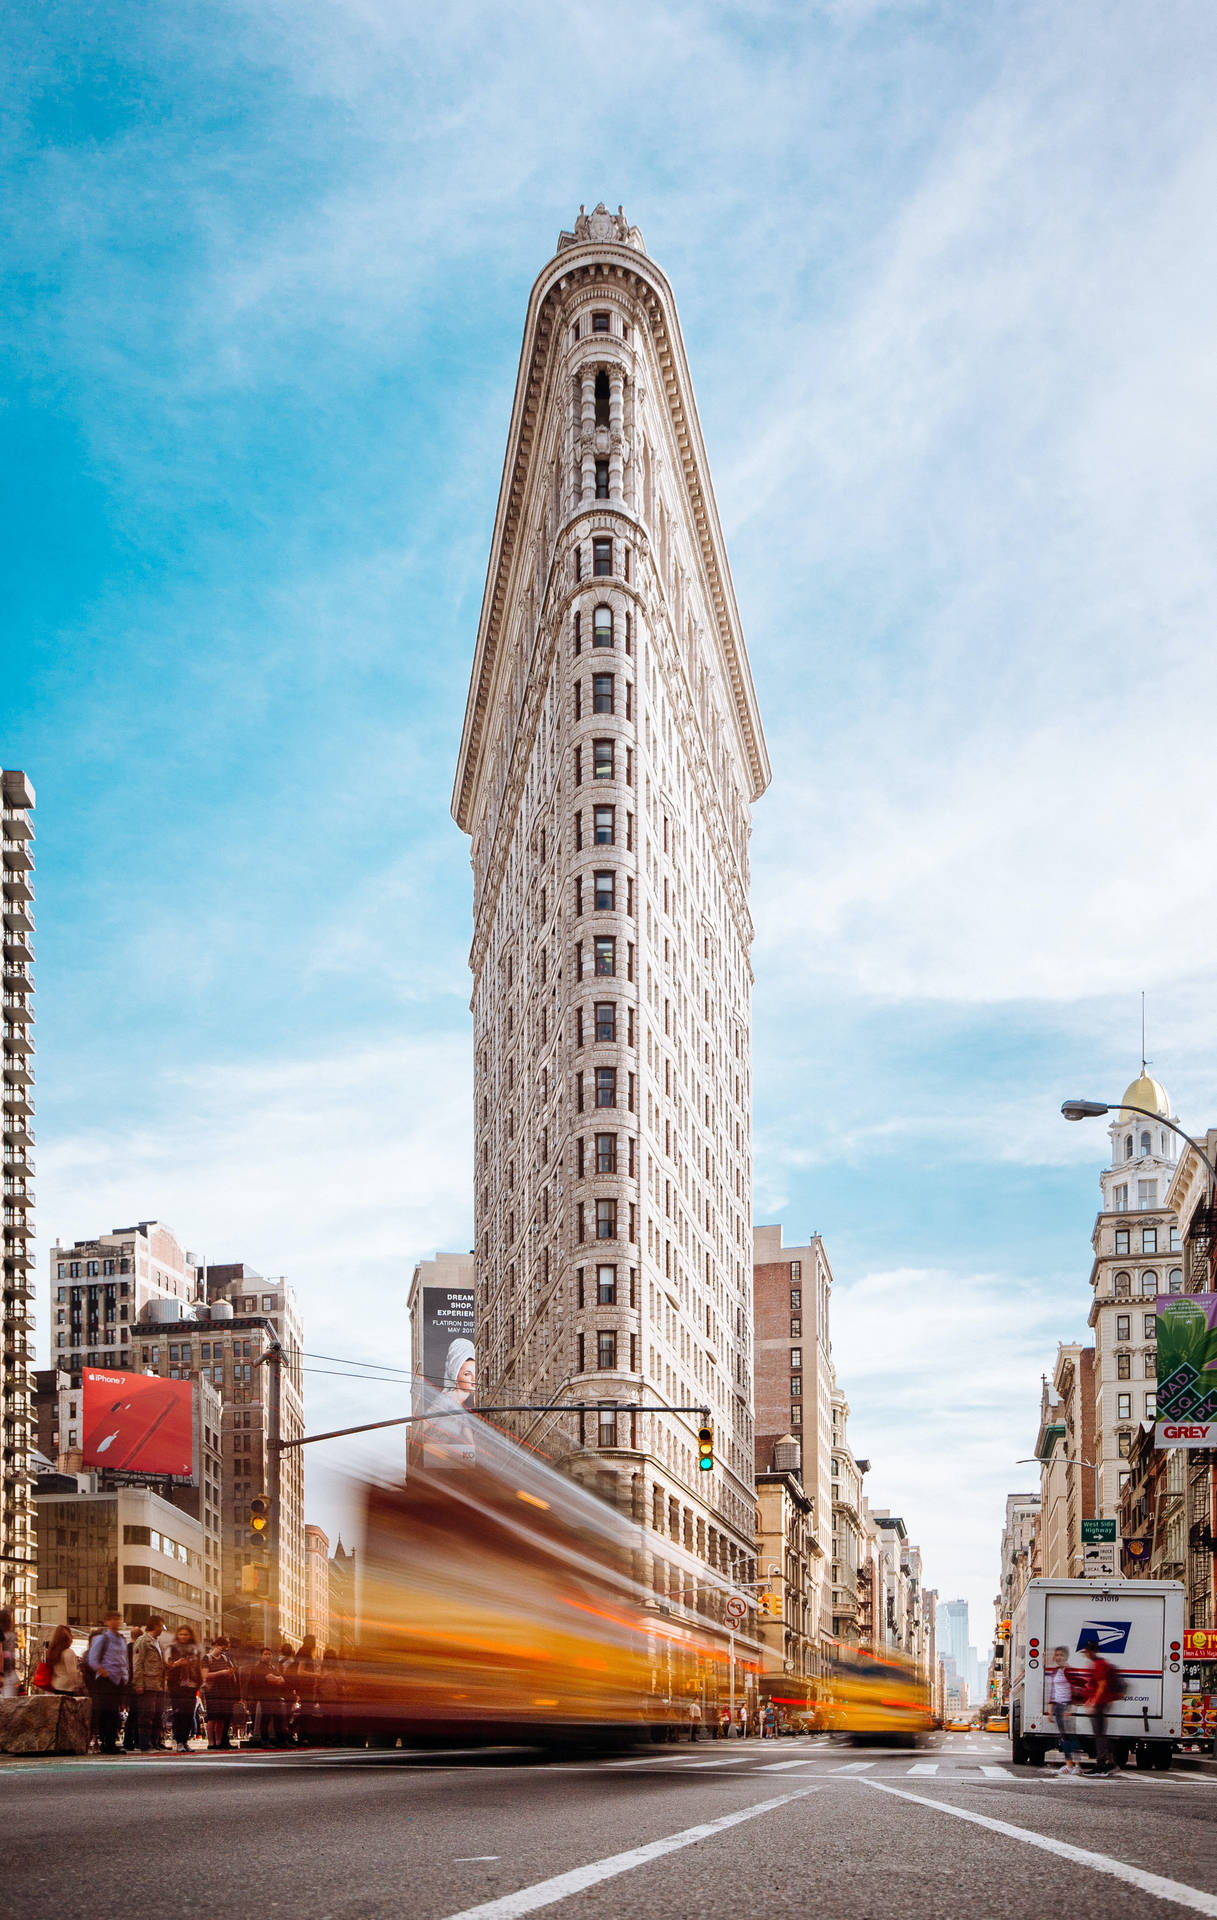 Caption: Stunning 4k Display Of Redmi Device Showcasing Impressive Cityscape